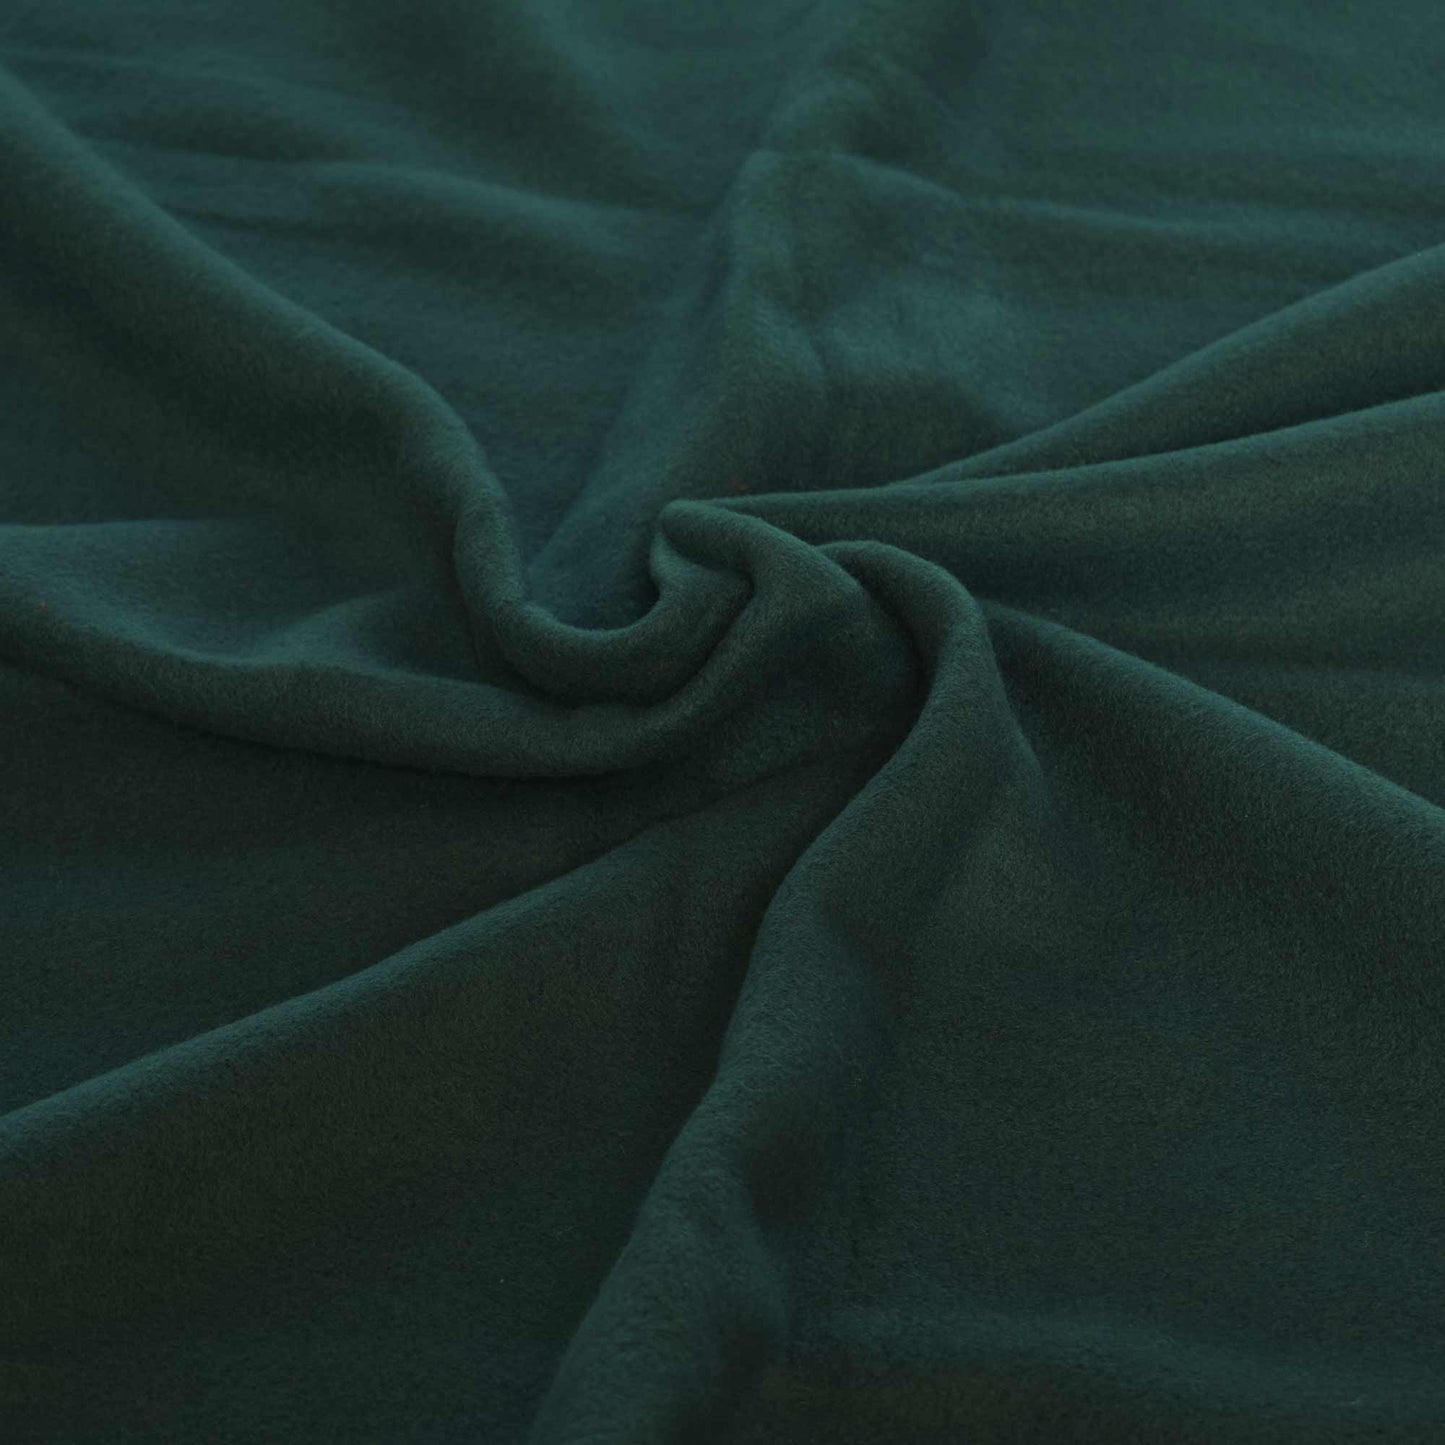 Standard Blanket